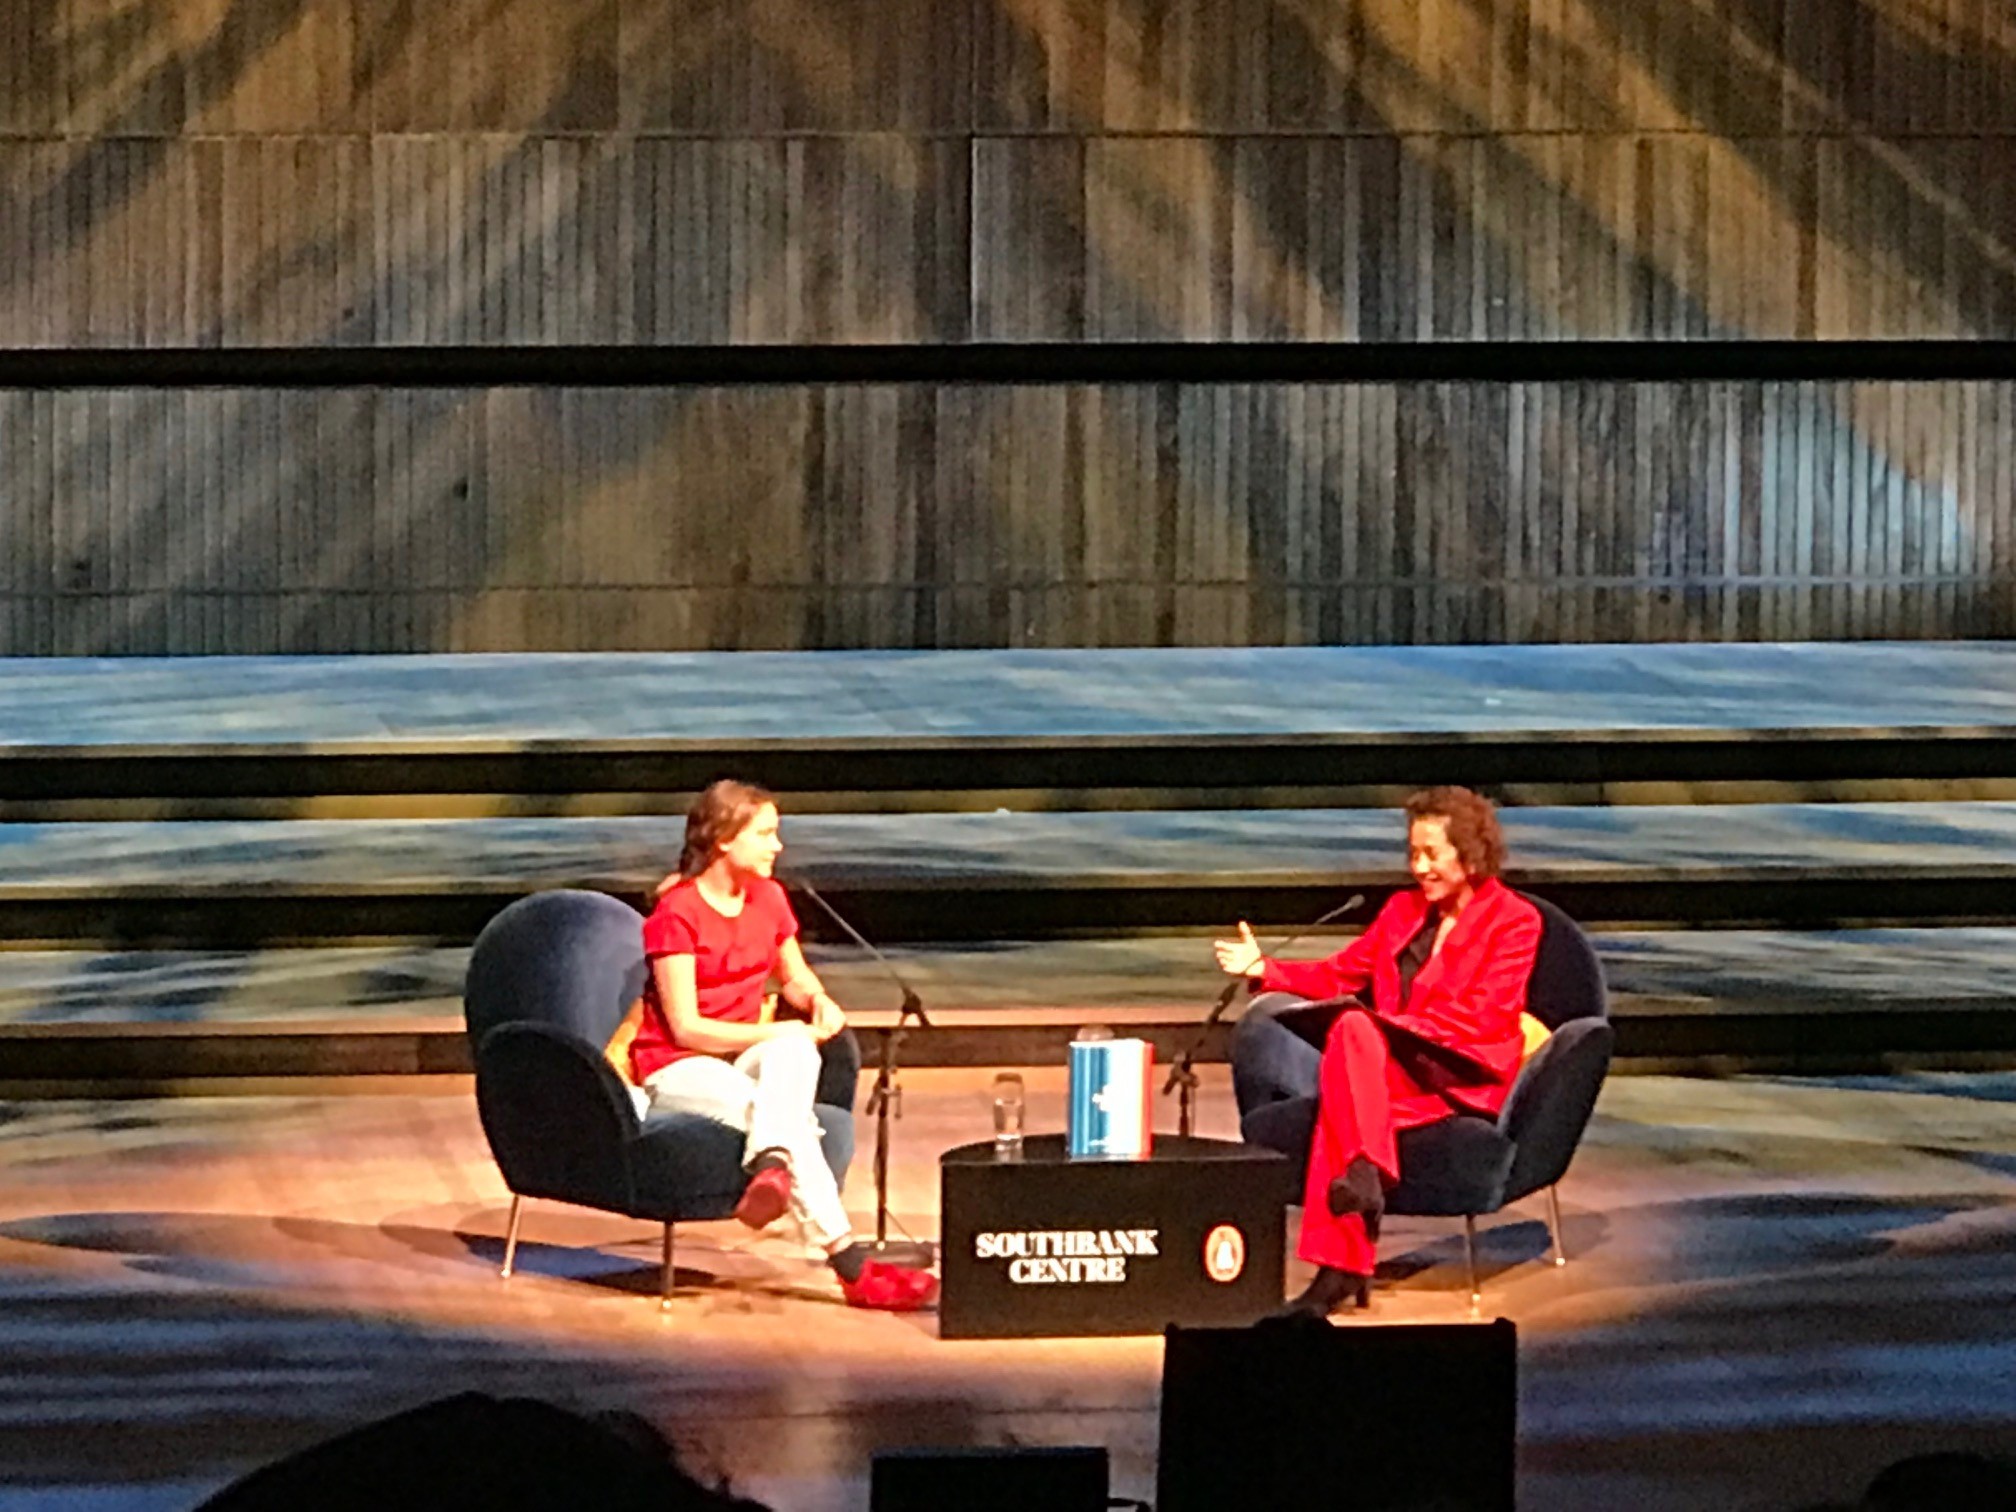 Greta Thunberg at the Southbank. The Climate Book activist